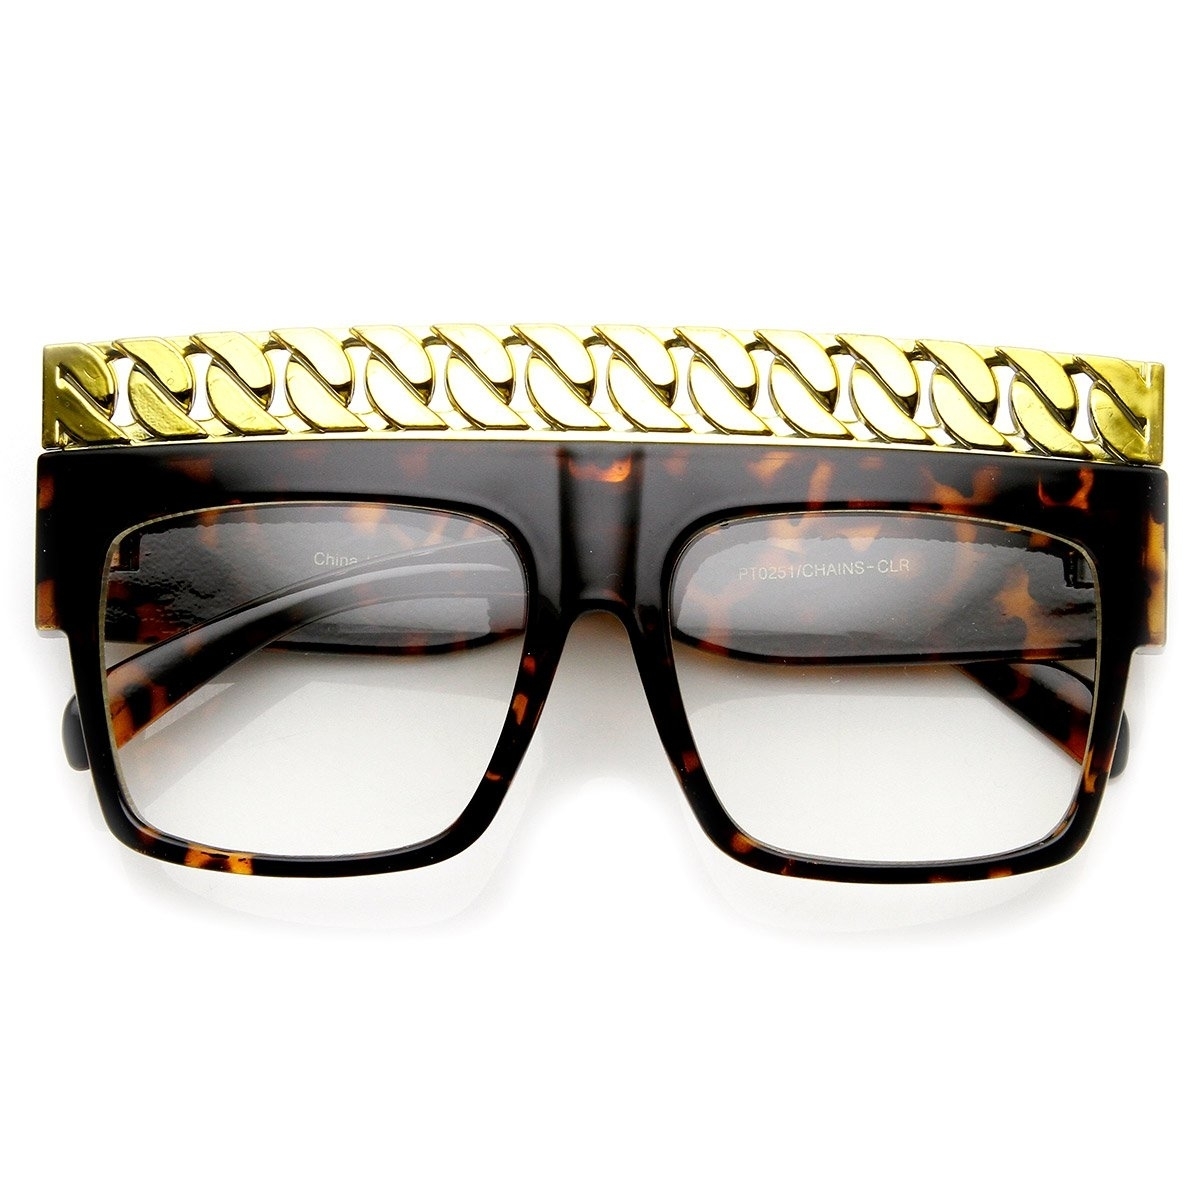 High Fashion Bold Chain Top Square Clear Lens Sunglasses - Shiny Black